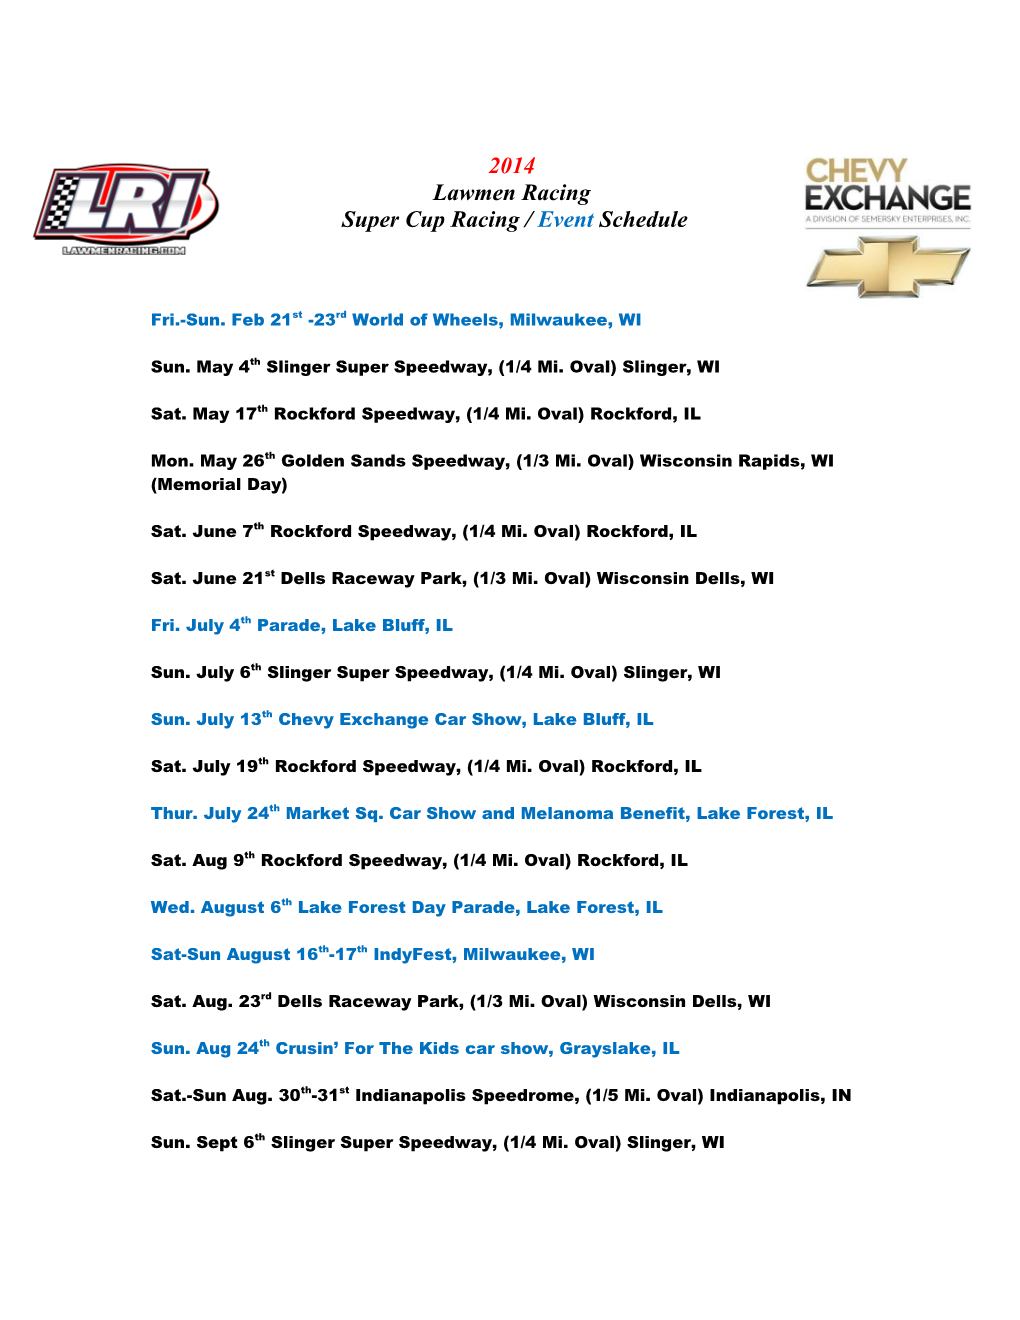 Super Cup Racing / Event Schedule